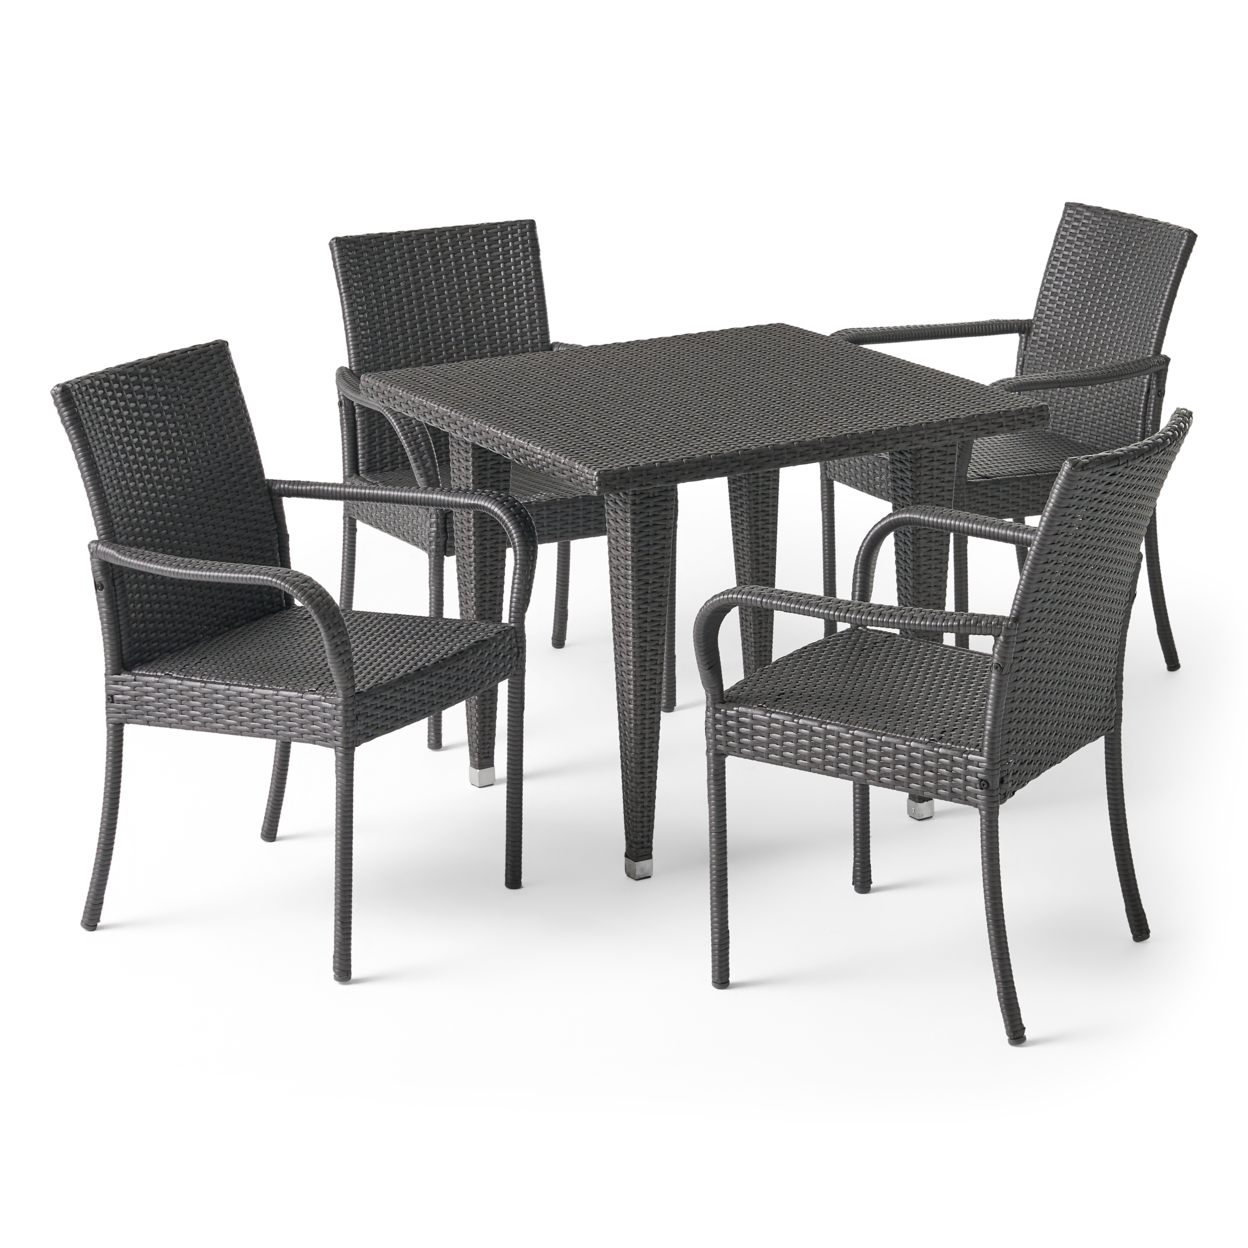 Mumford Outdoor Contemporary 4 Seater Wicker Dining Set - Gray